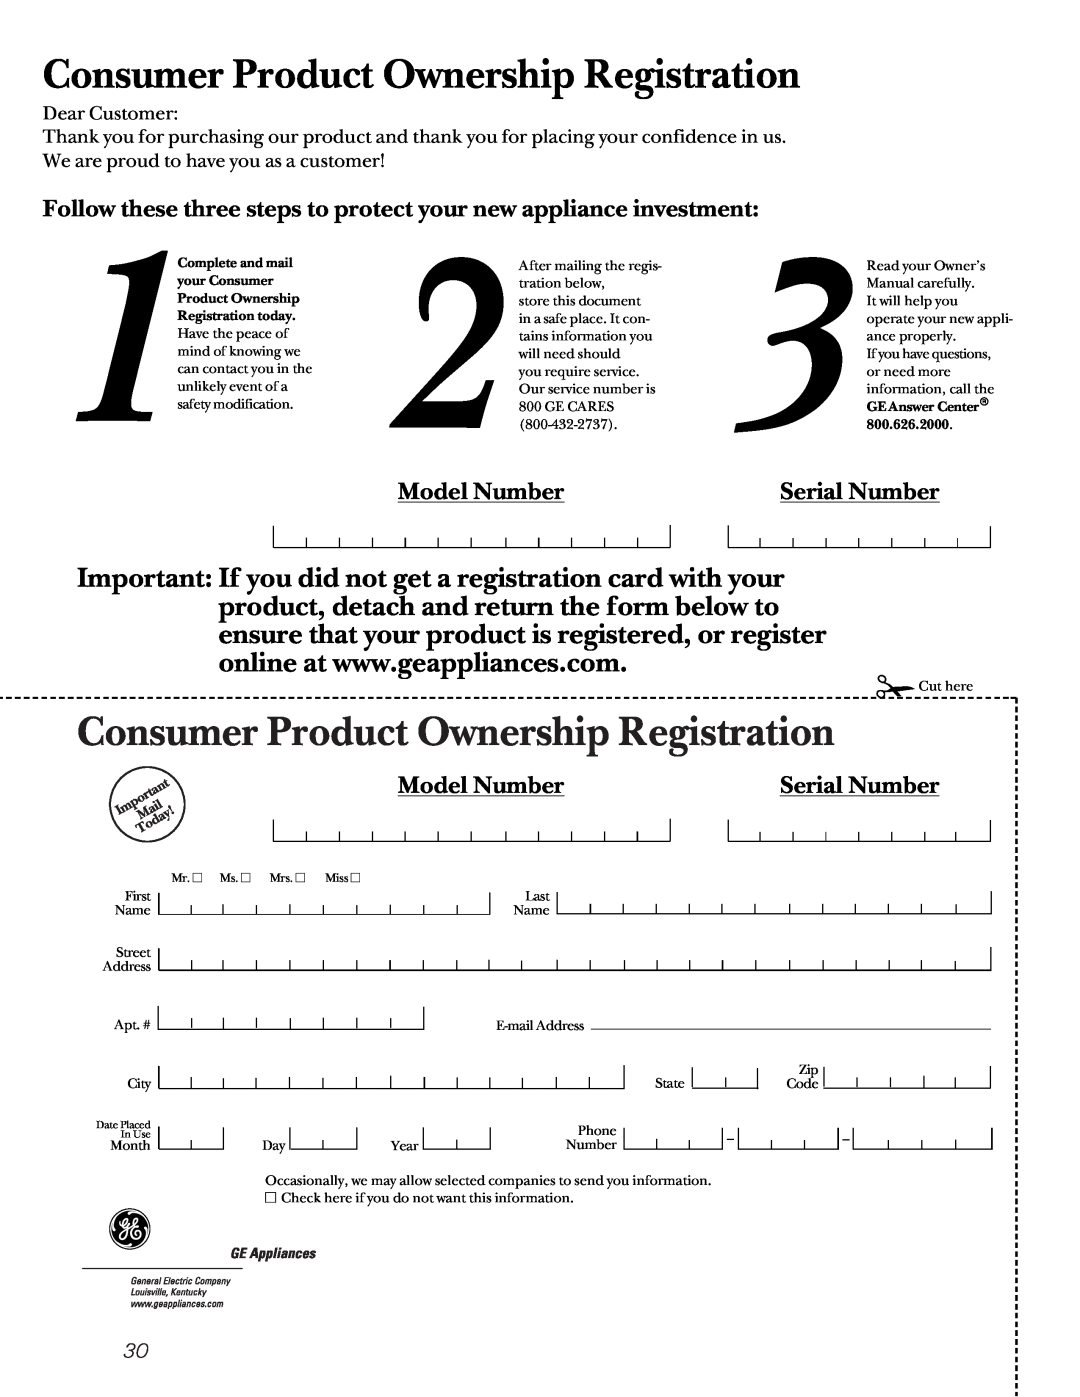 GE 22-27 owner manual Model Number, Serial Number, Dear Customer, Consumer Product Ownership Registration 